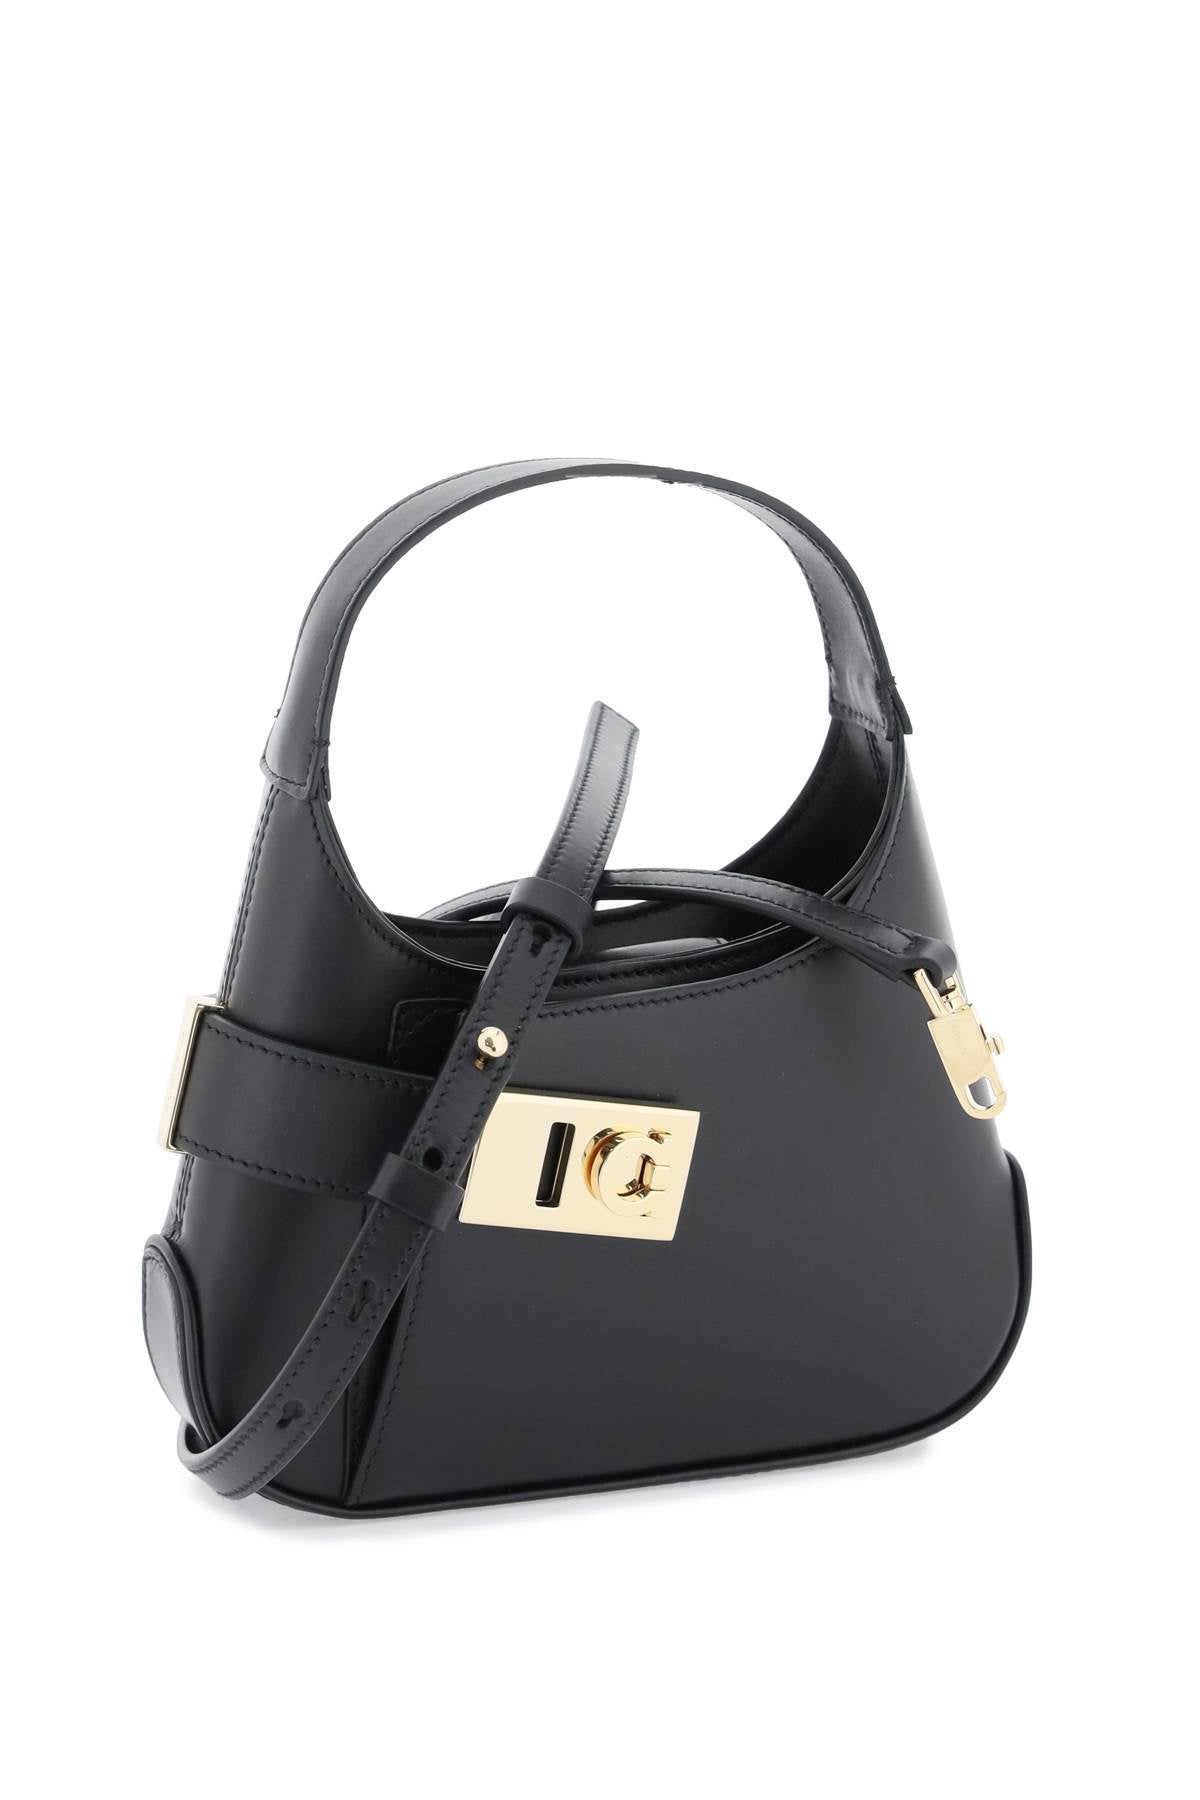 FERRAGAMO Mini Hobo Leather Shoulder Bag with Asymmetrical Gold-Tone Buckle - Black